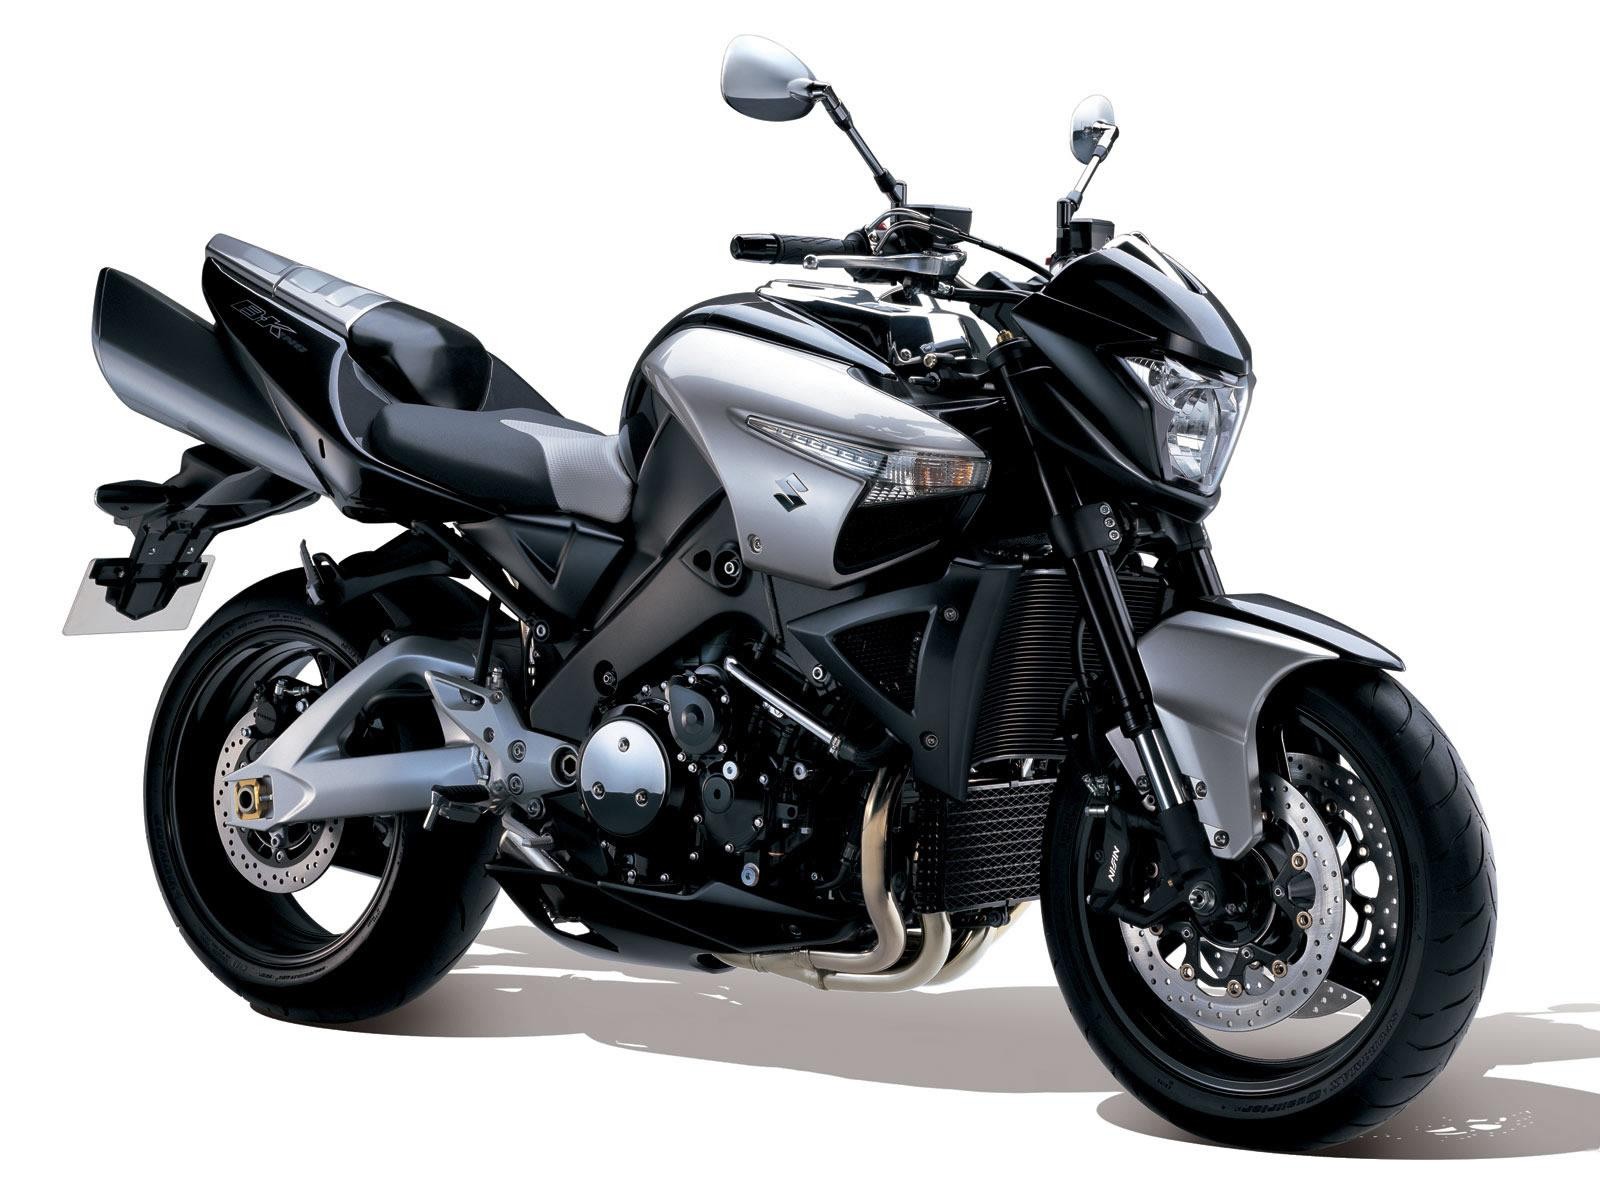 Kumpulan Gambar Sepeda Motor Suzuki Terbaru Terbaru Codot Modifikasi